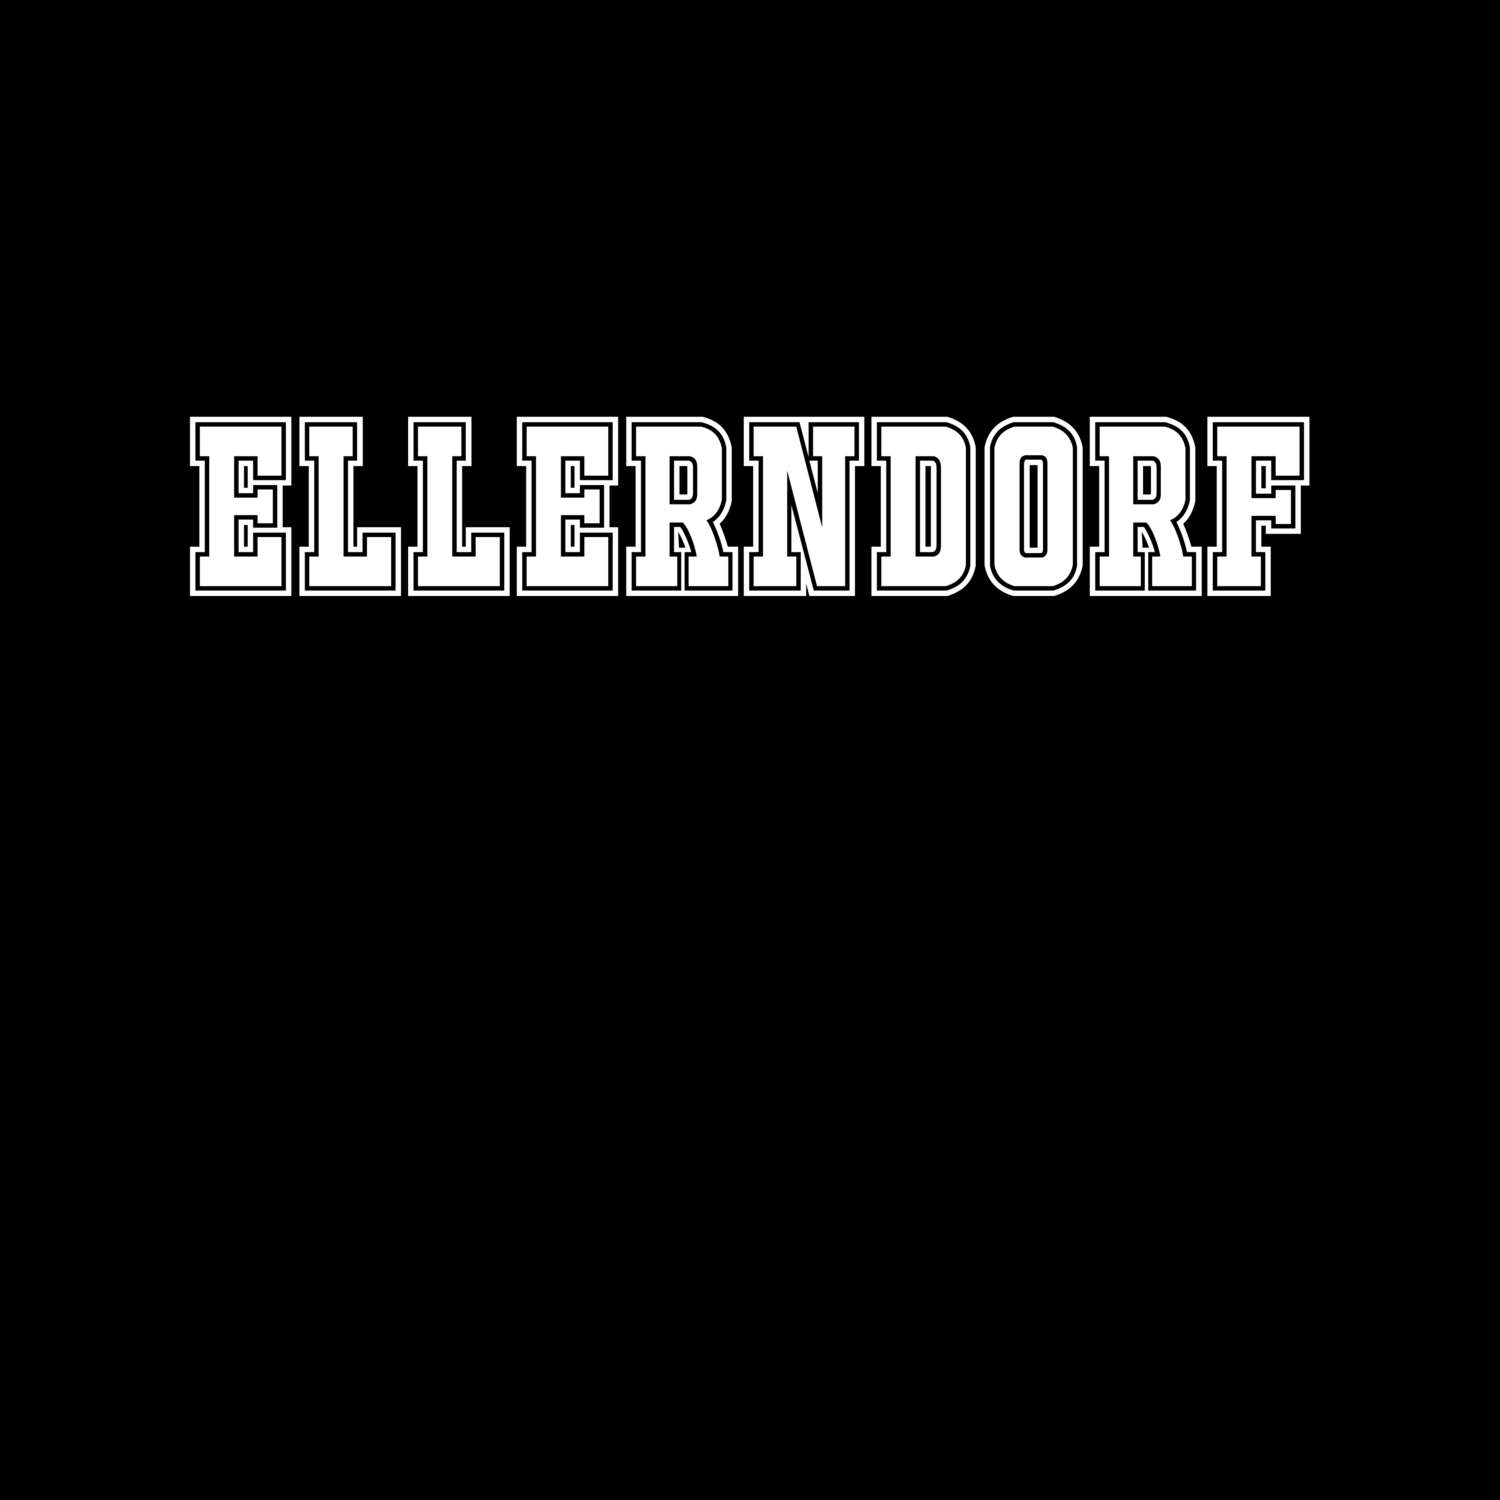 Ellerndorf T-Shirt »Classic«